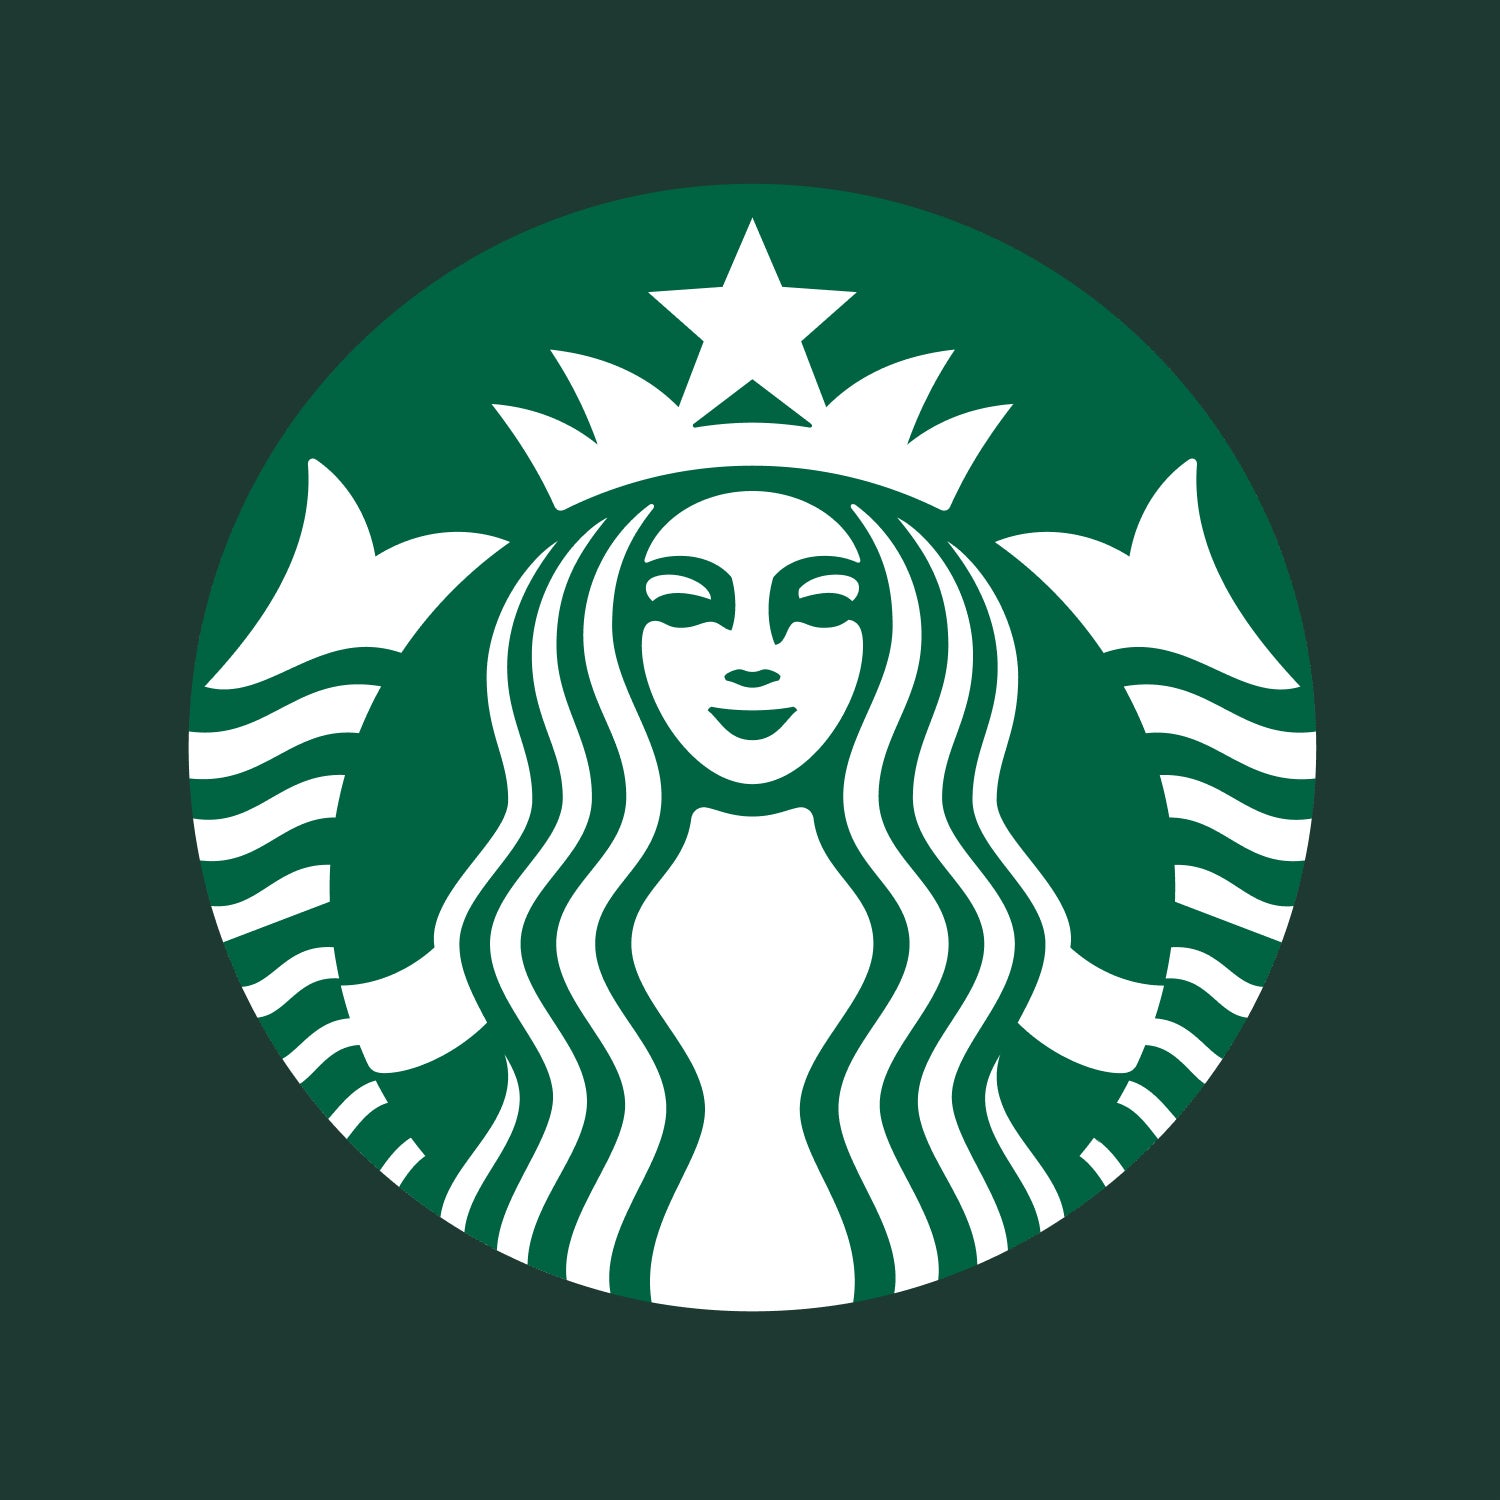 (c) Starbucks.co.nz